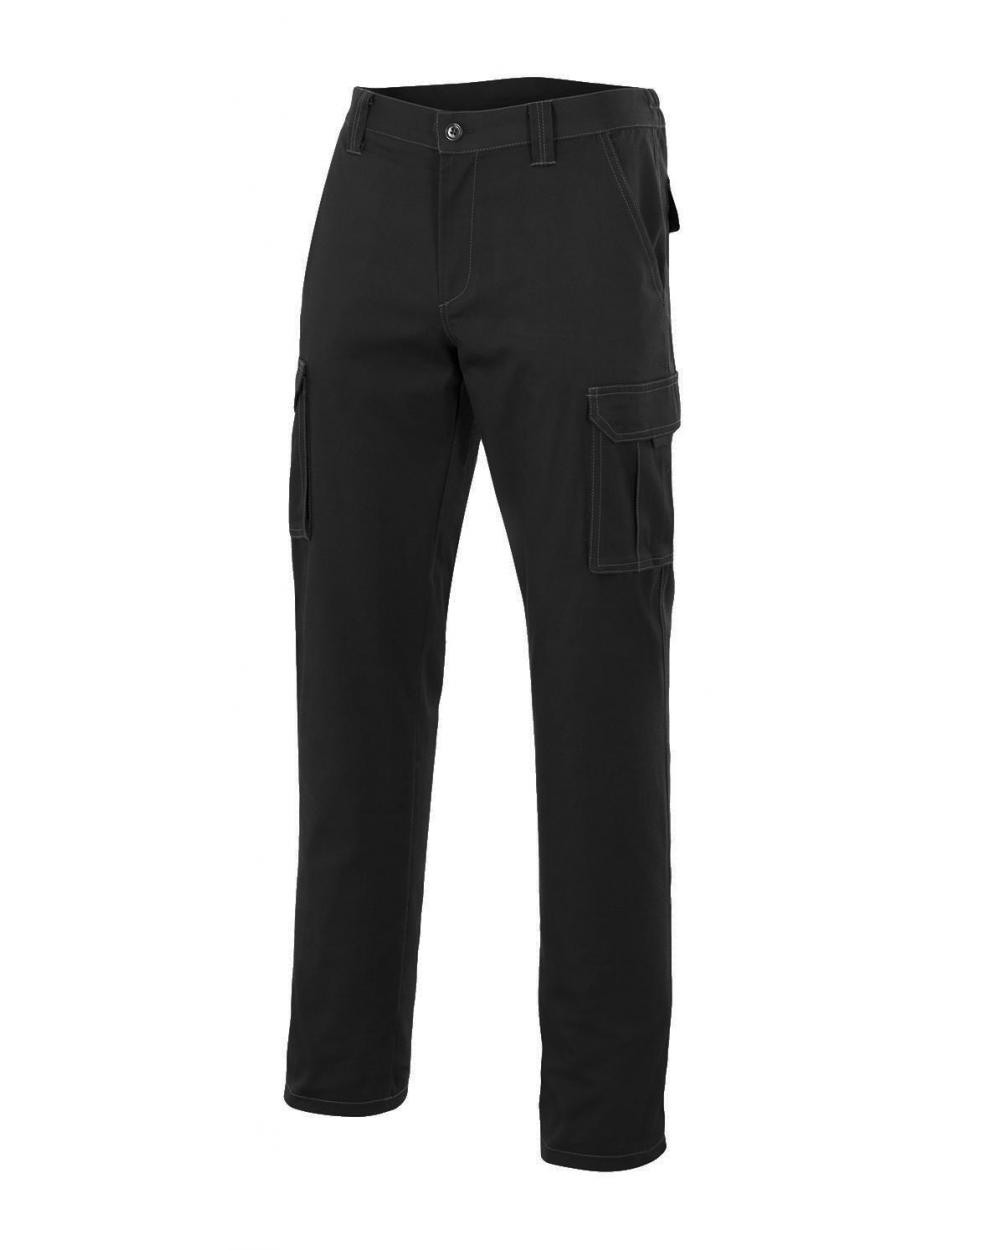 Comprar Pantalón multibolsillos serie 103001 online barato Negro